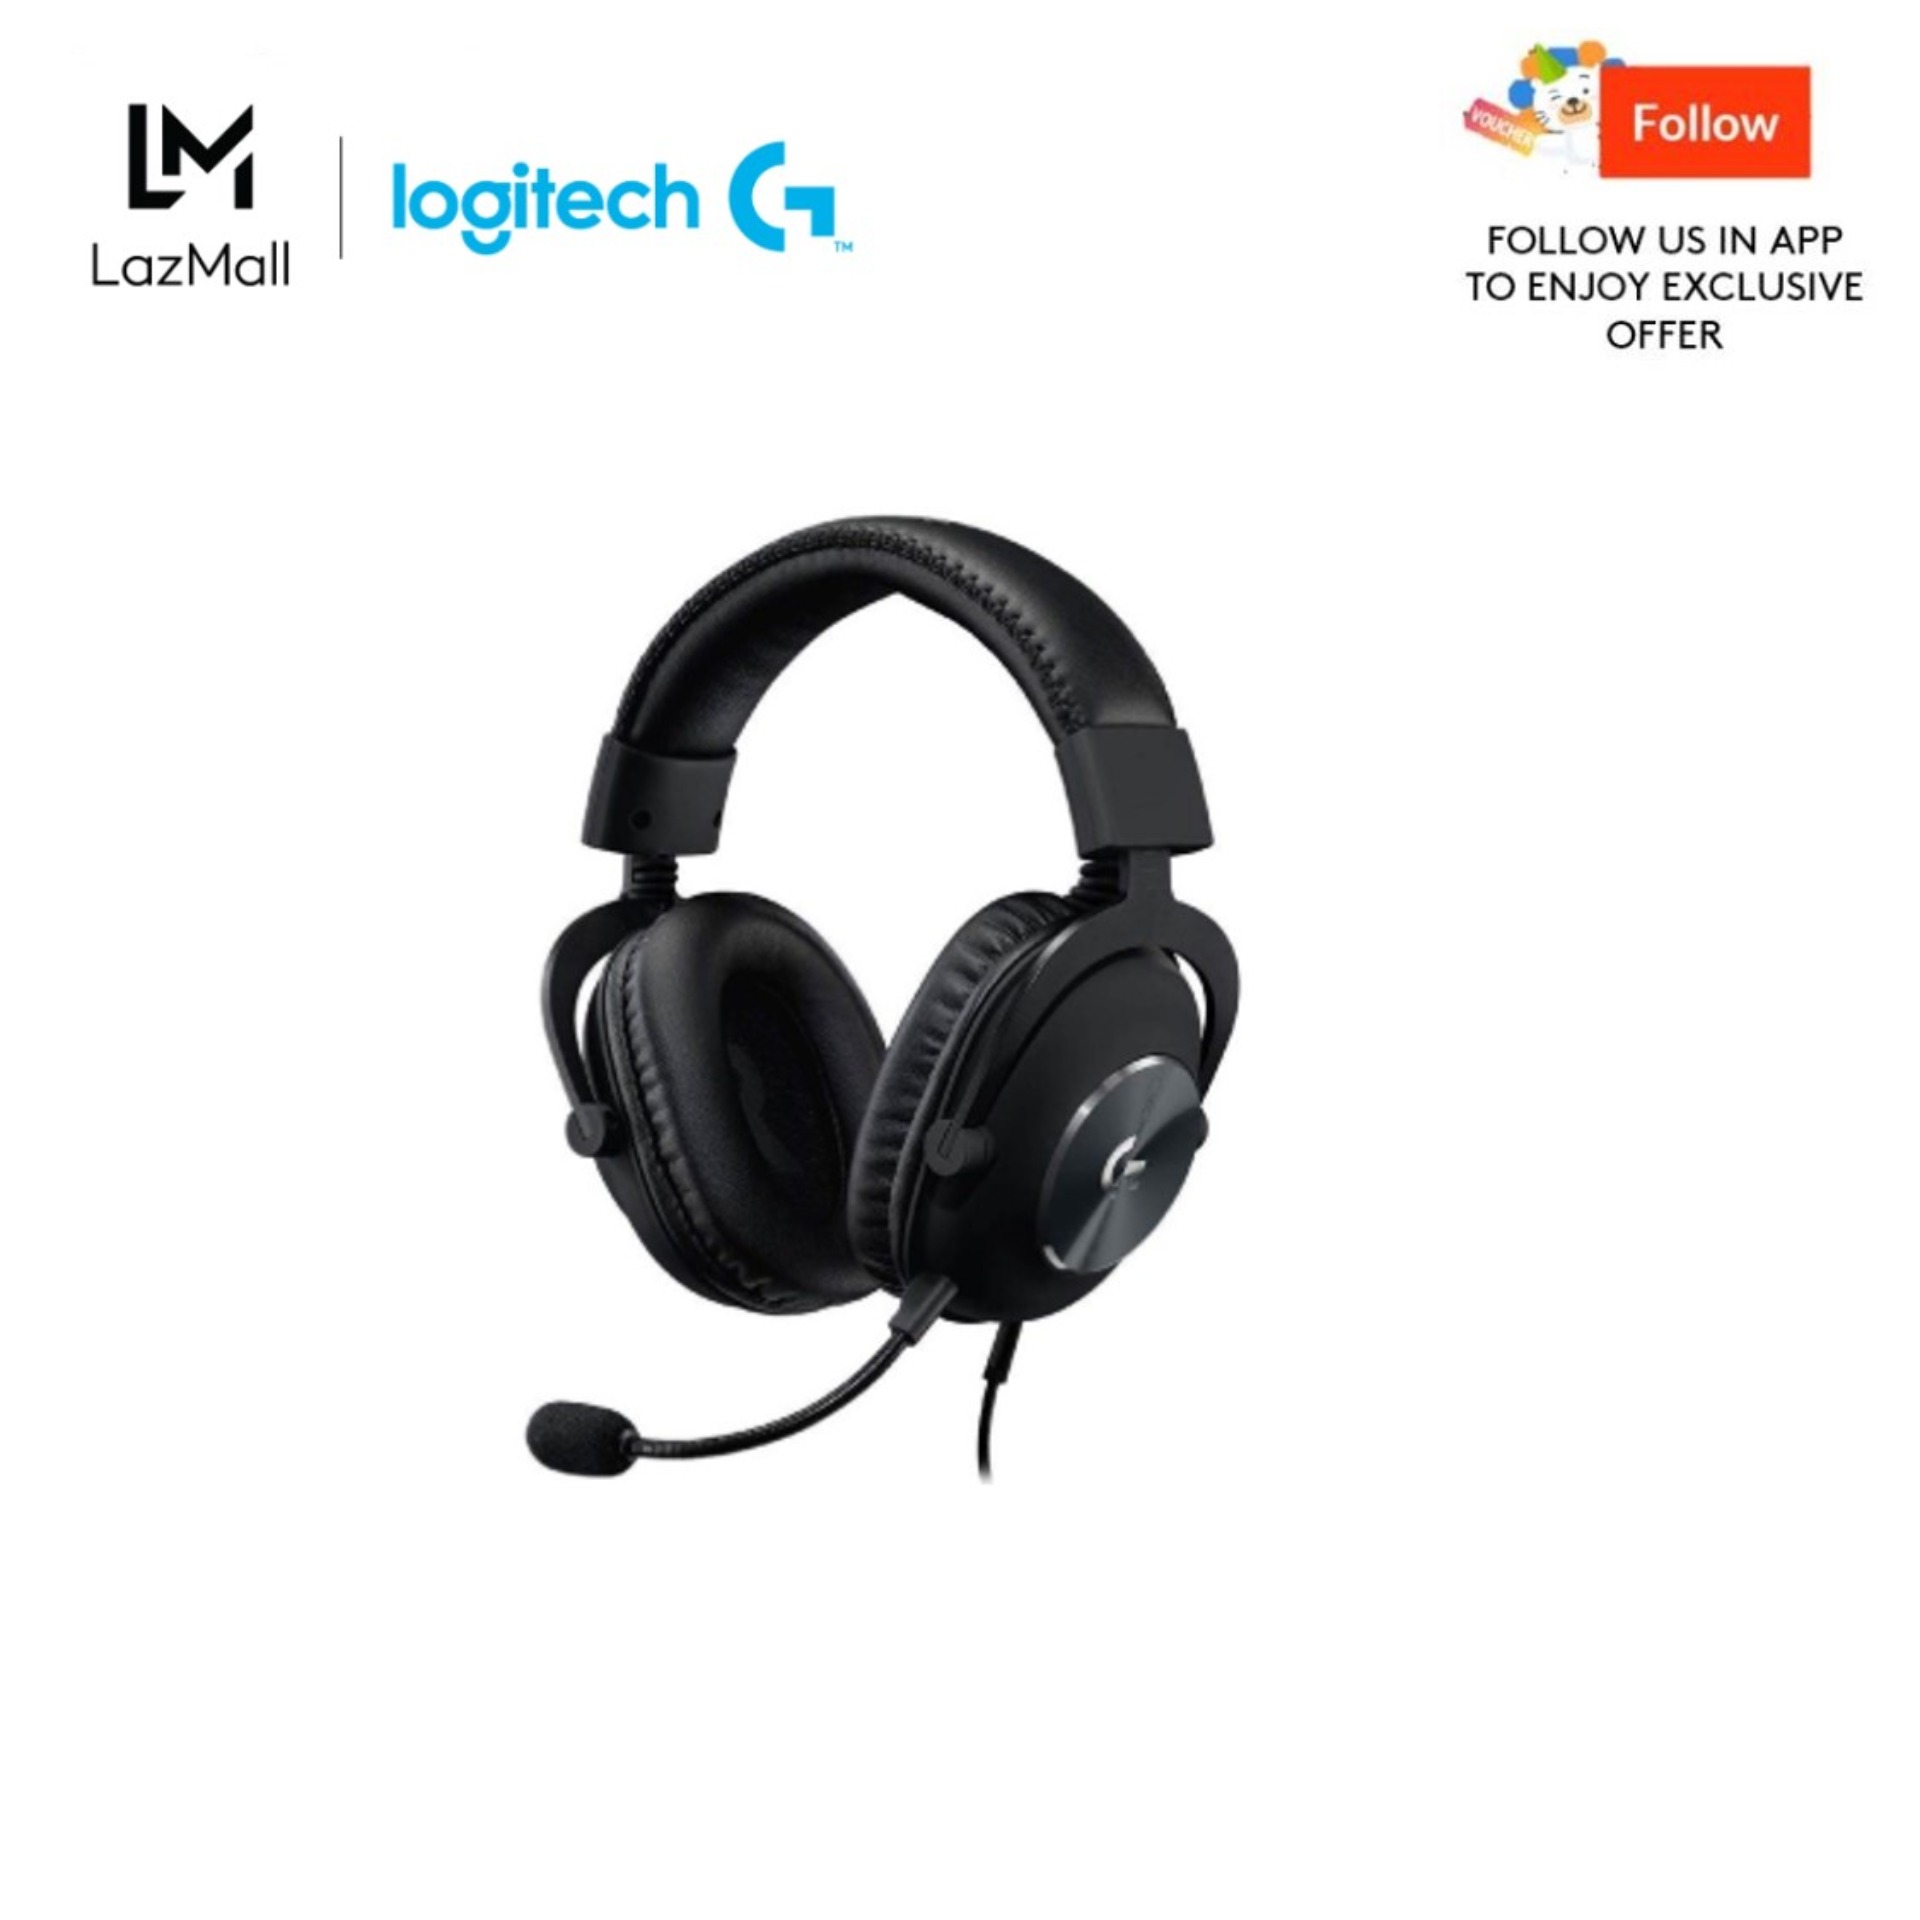 Logitech headset pro. Наушники логитеч g Pro x. Беспроводные наушники Logitech g Pro x. Наушники Logitech Pro g50. Игровые наушники Logitech g Pro x.